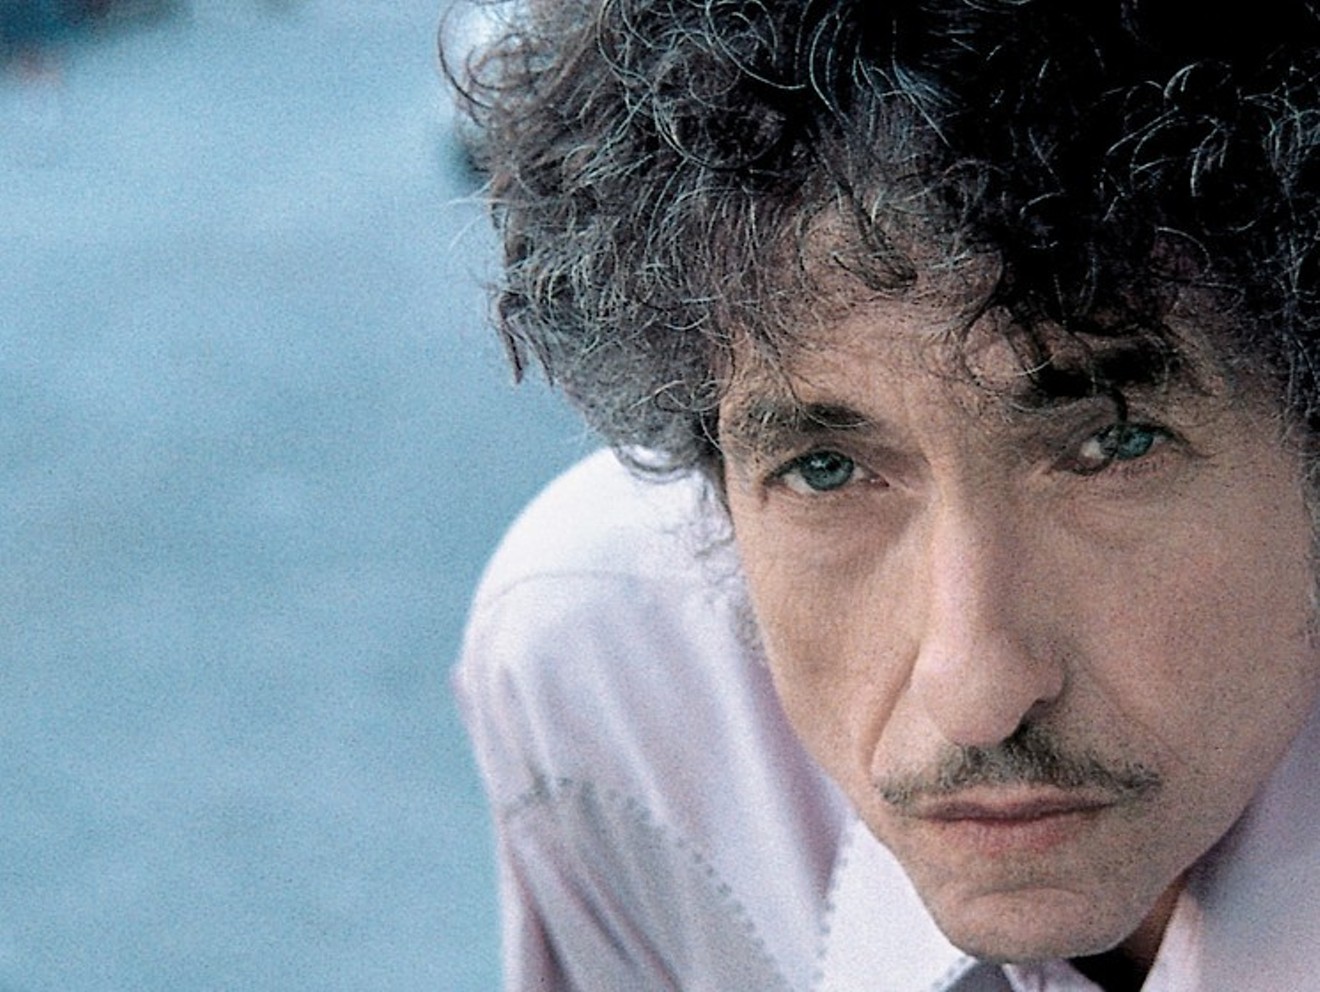 Happy 80th birthday to Bob Dylan.